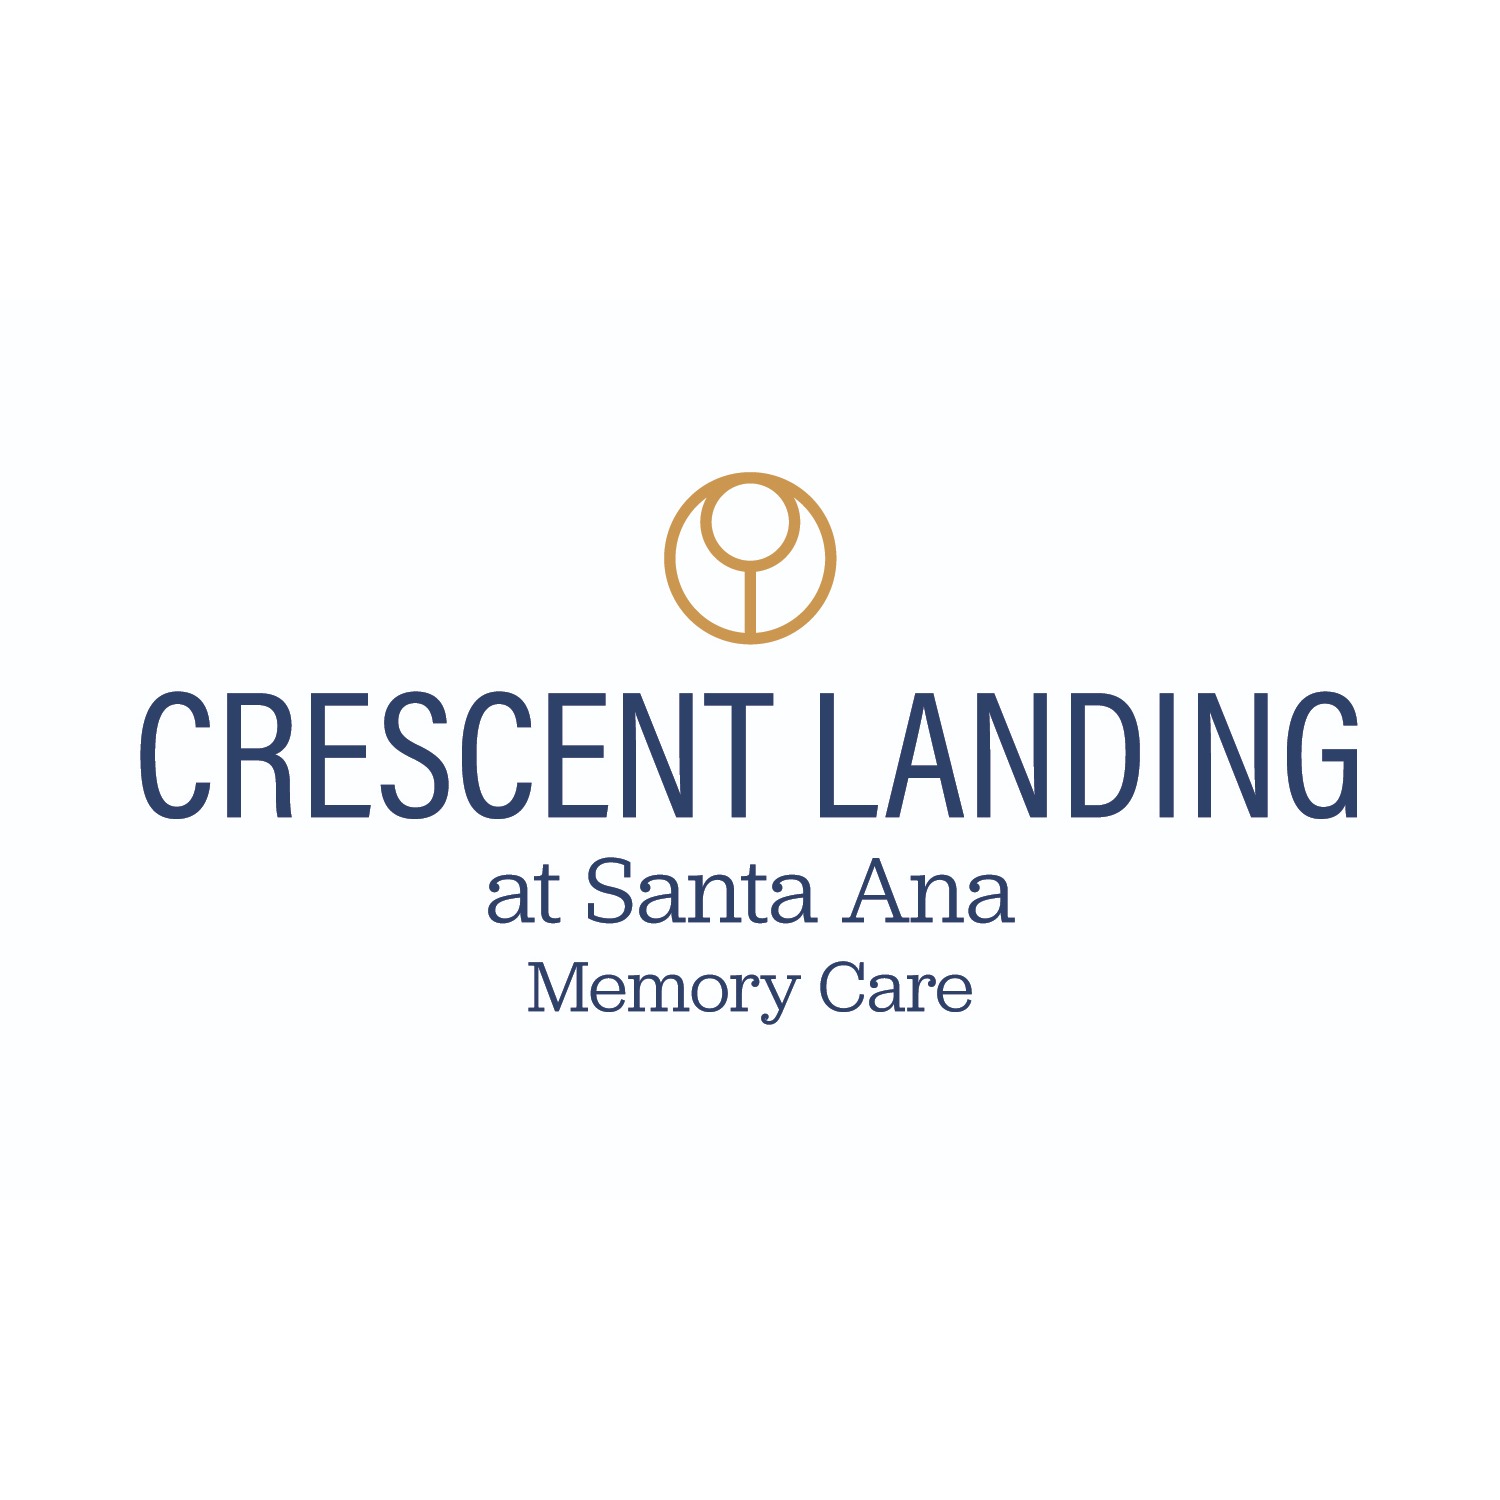 Crescent Landing at Santa Ana Memory Care